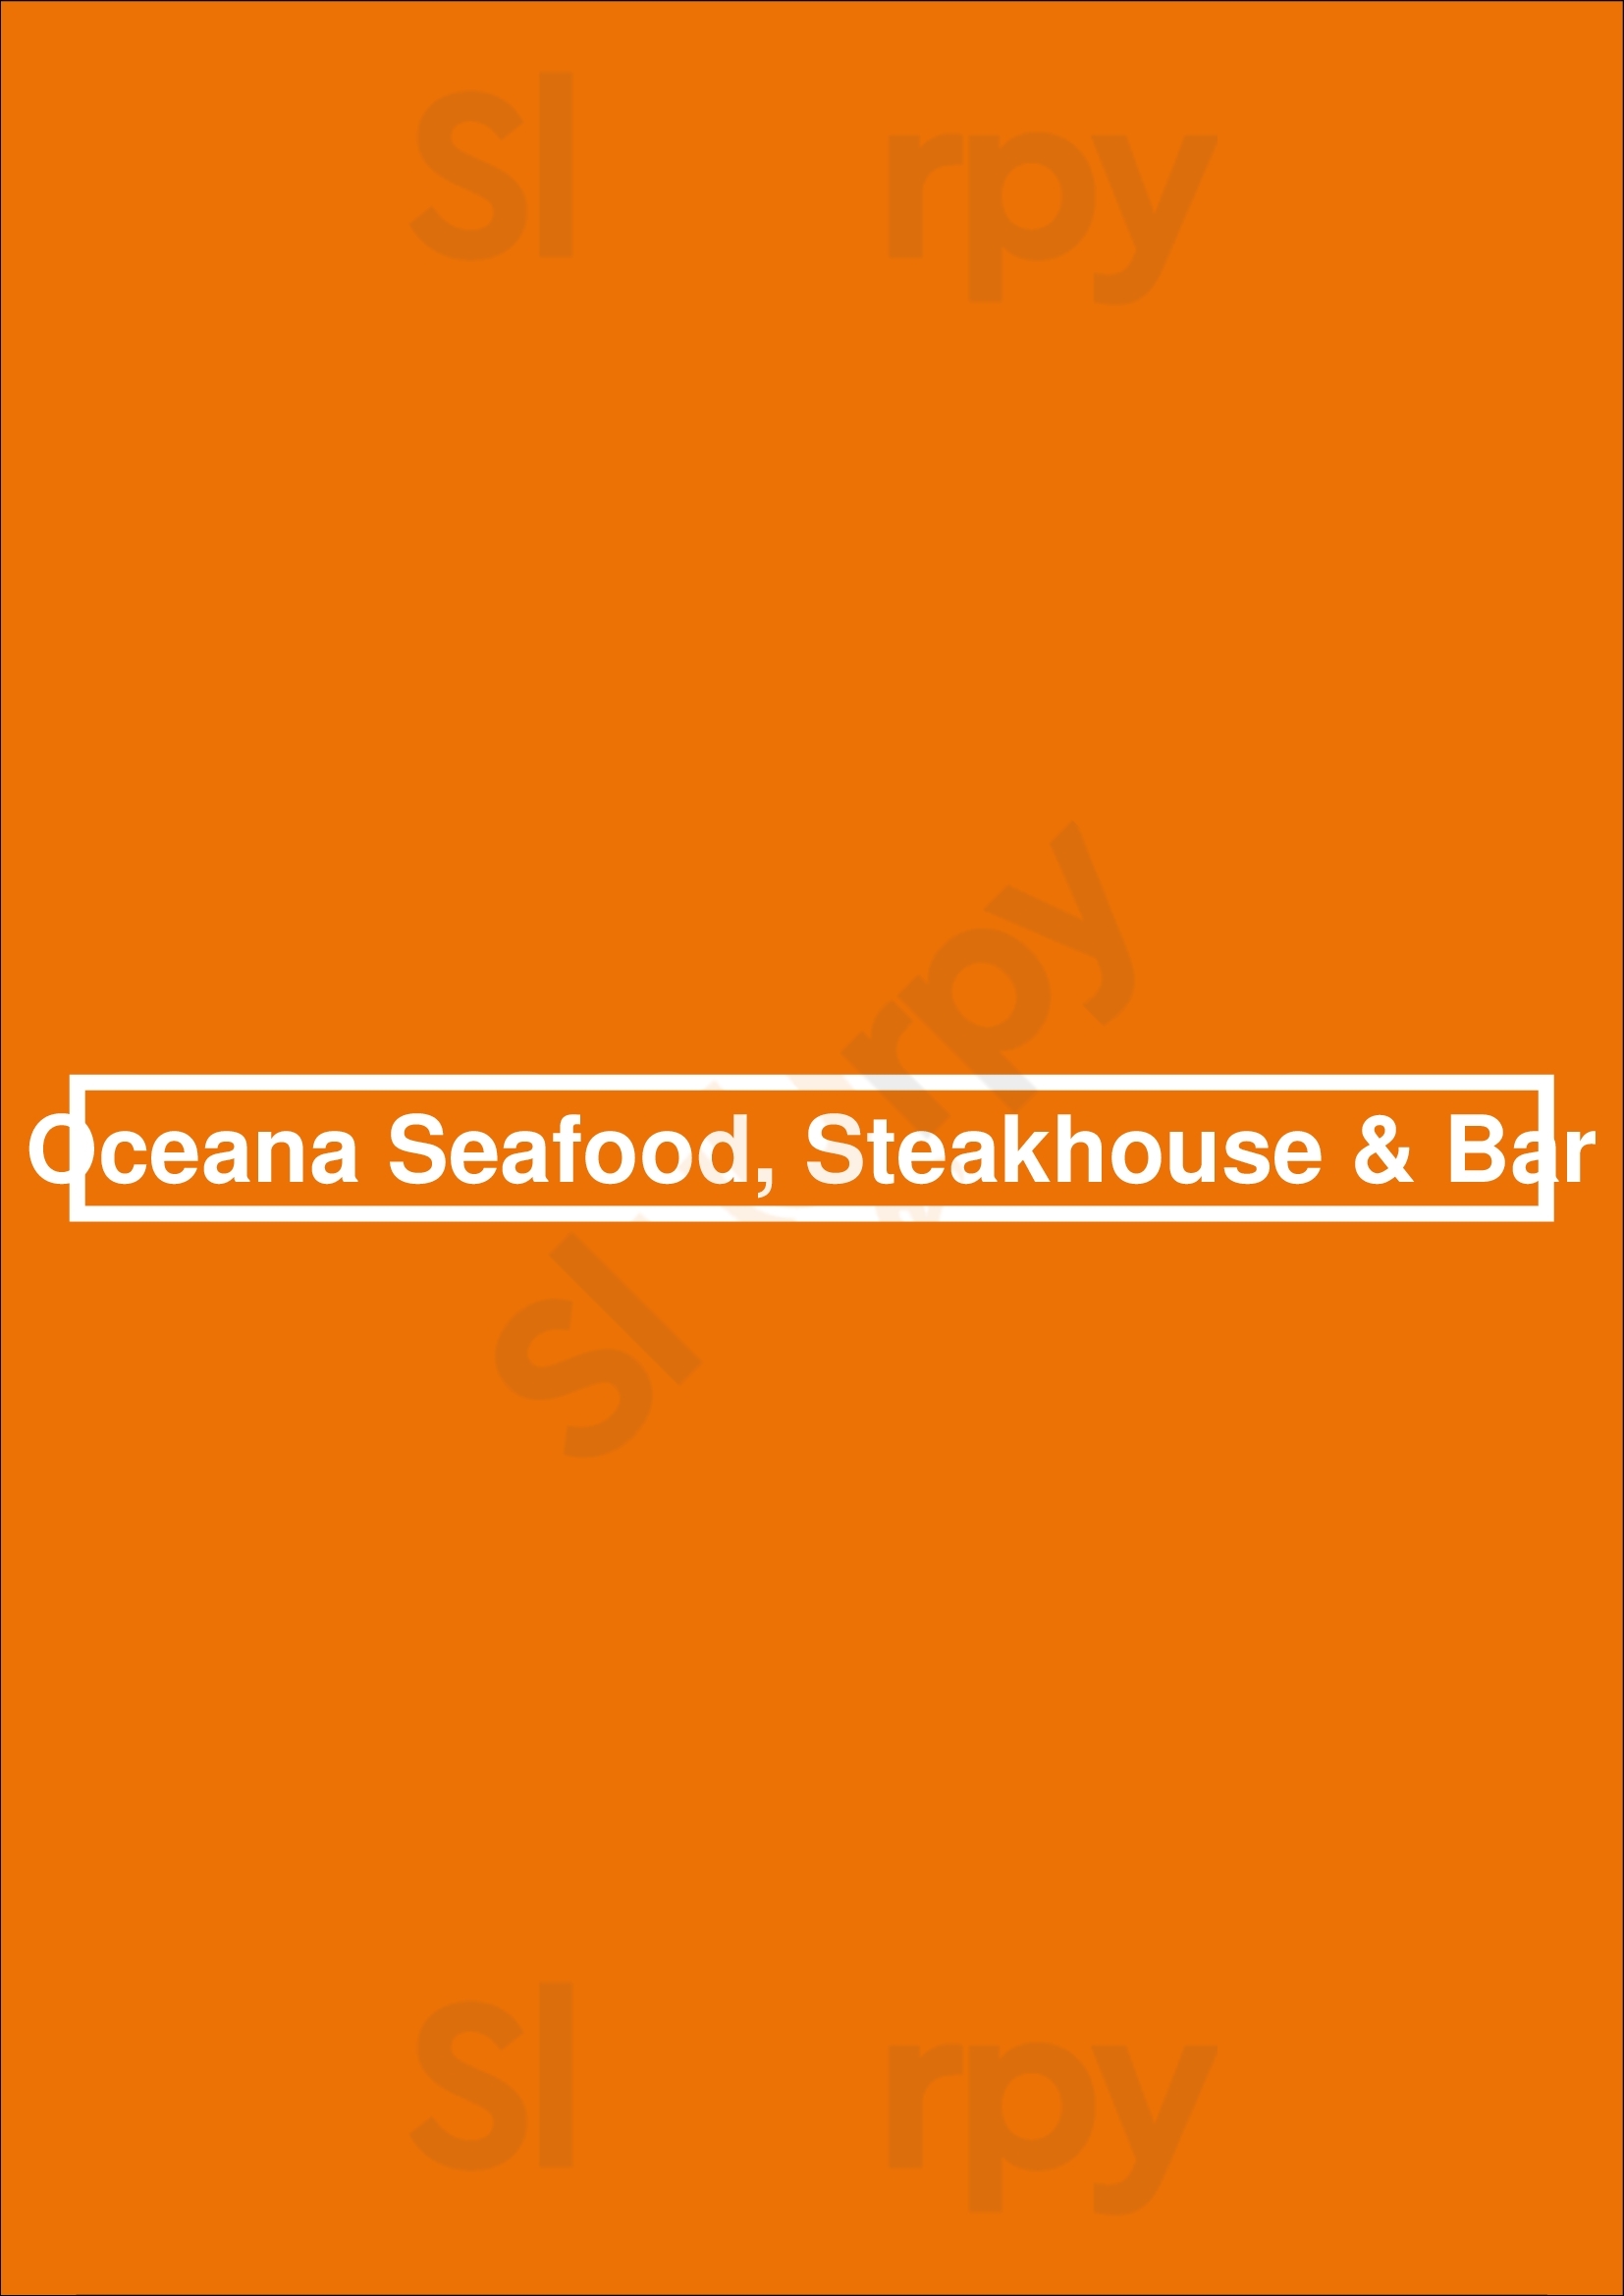 Oceana Seafood, Steakhouse & Bar Calgary Menu - 1